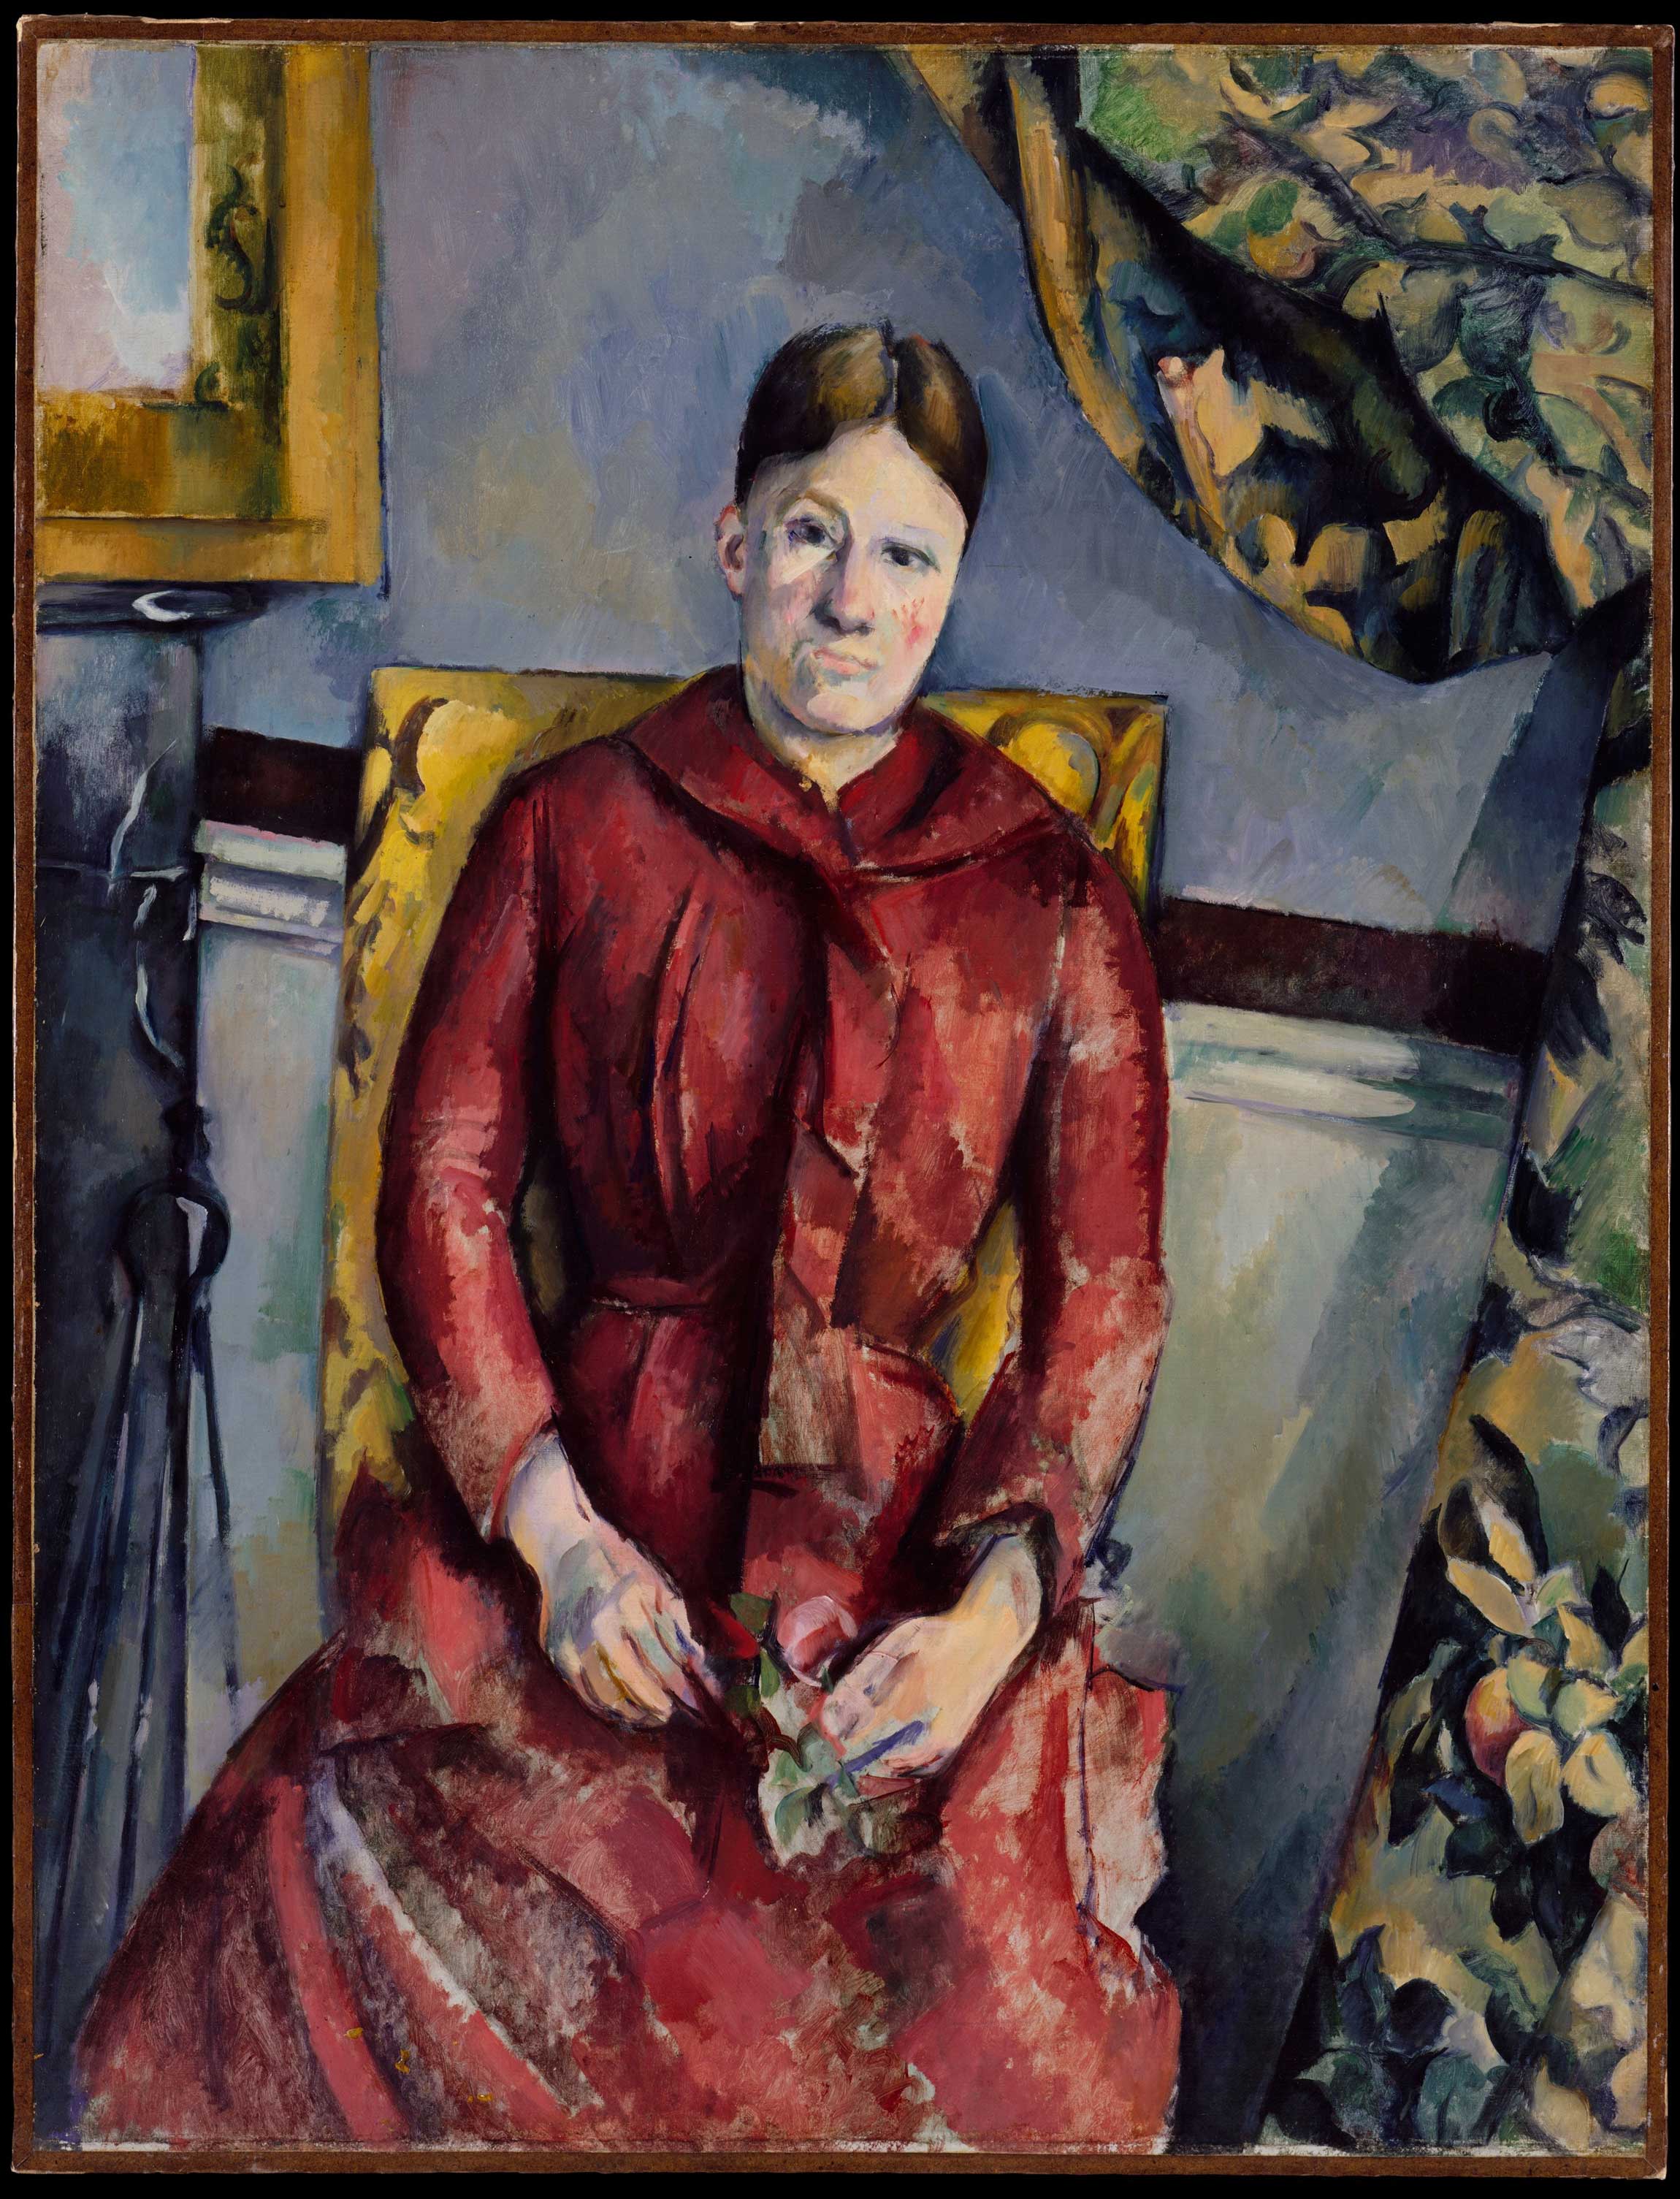 Paul_Cezanne_1888-90_Madame_Cezanne_(Hortense_Fiquet_1850–1922)_in_a_Red_Dress_oil_on_canvas_116.5_x_89.5_cm_The_Metropolitan_Museum_of_Art_New_York